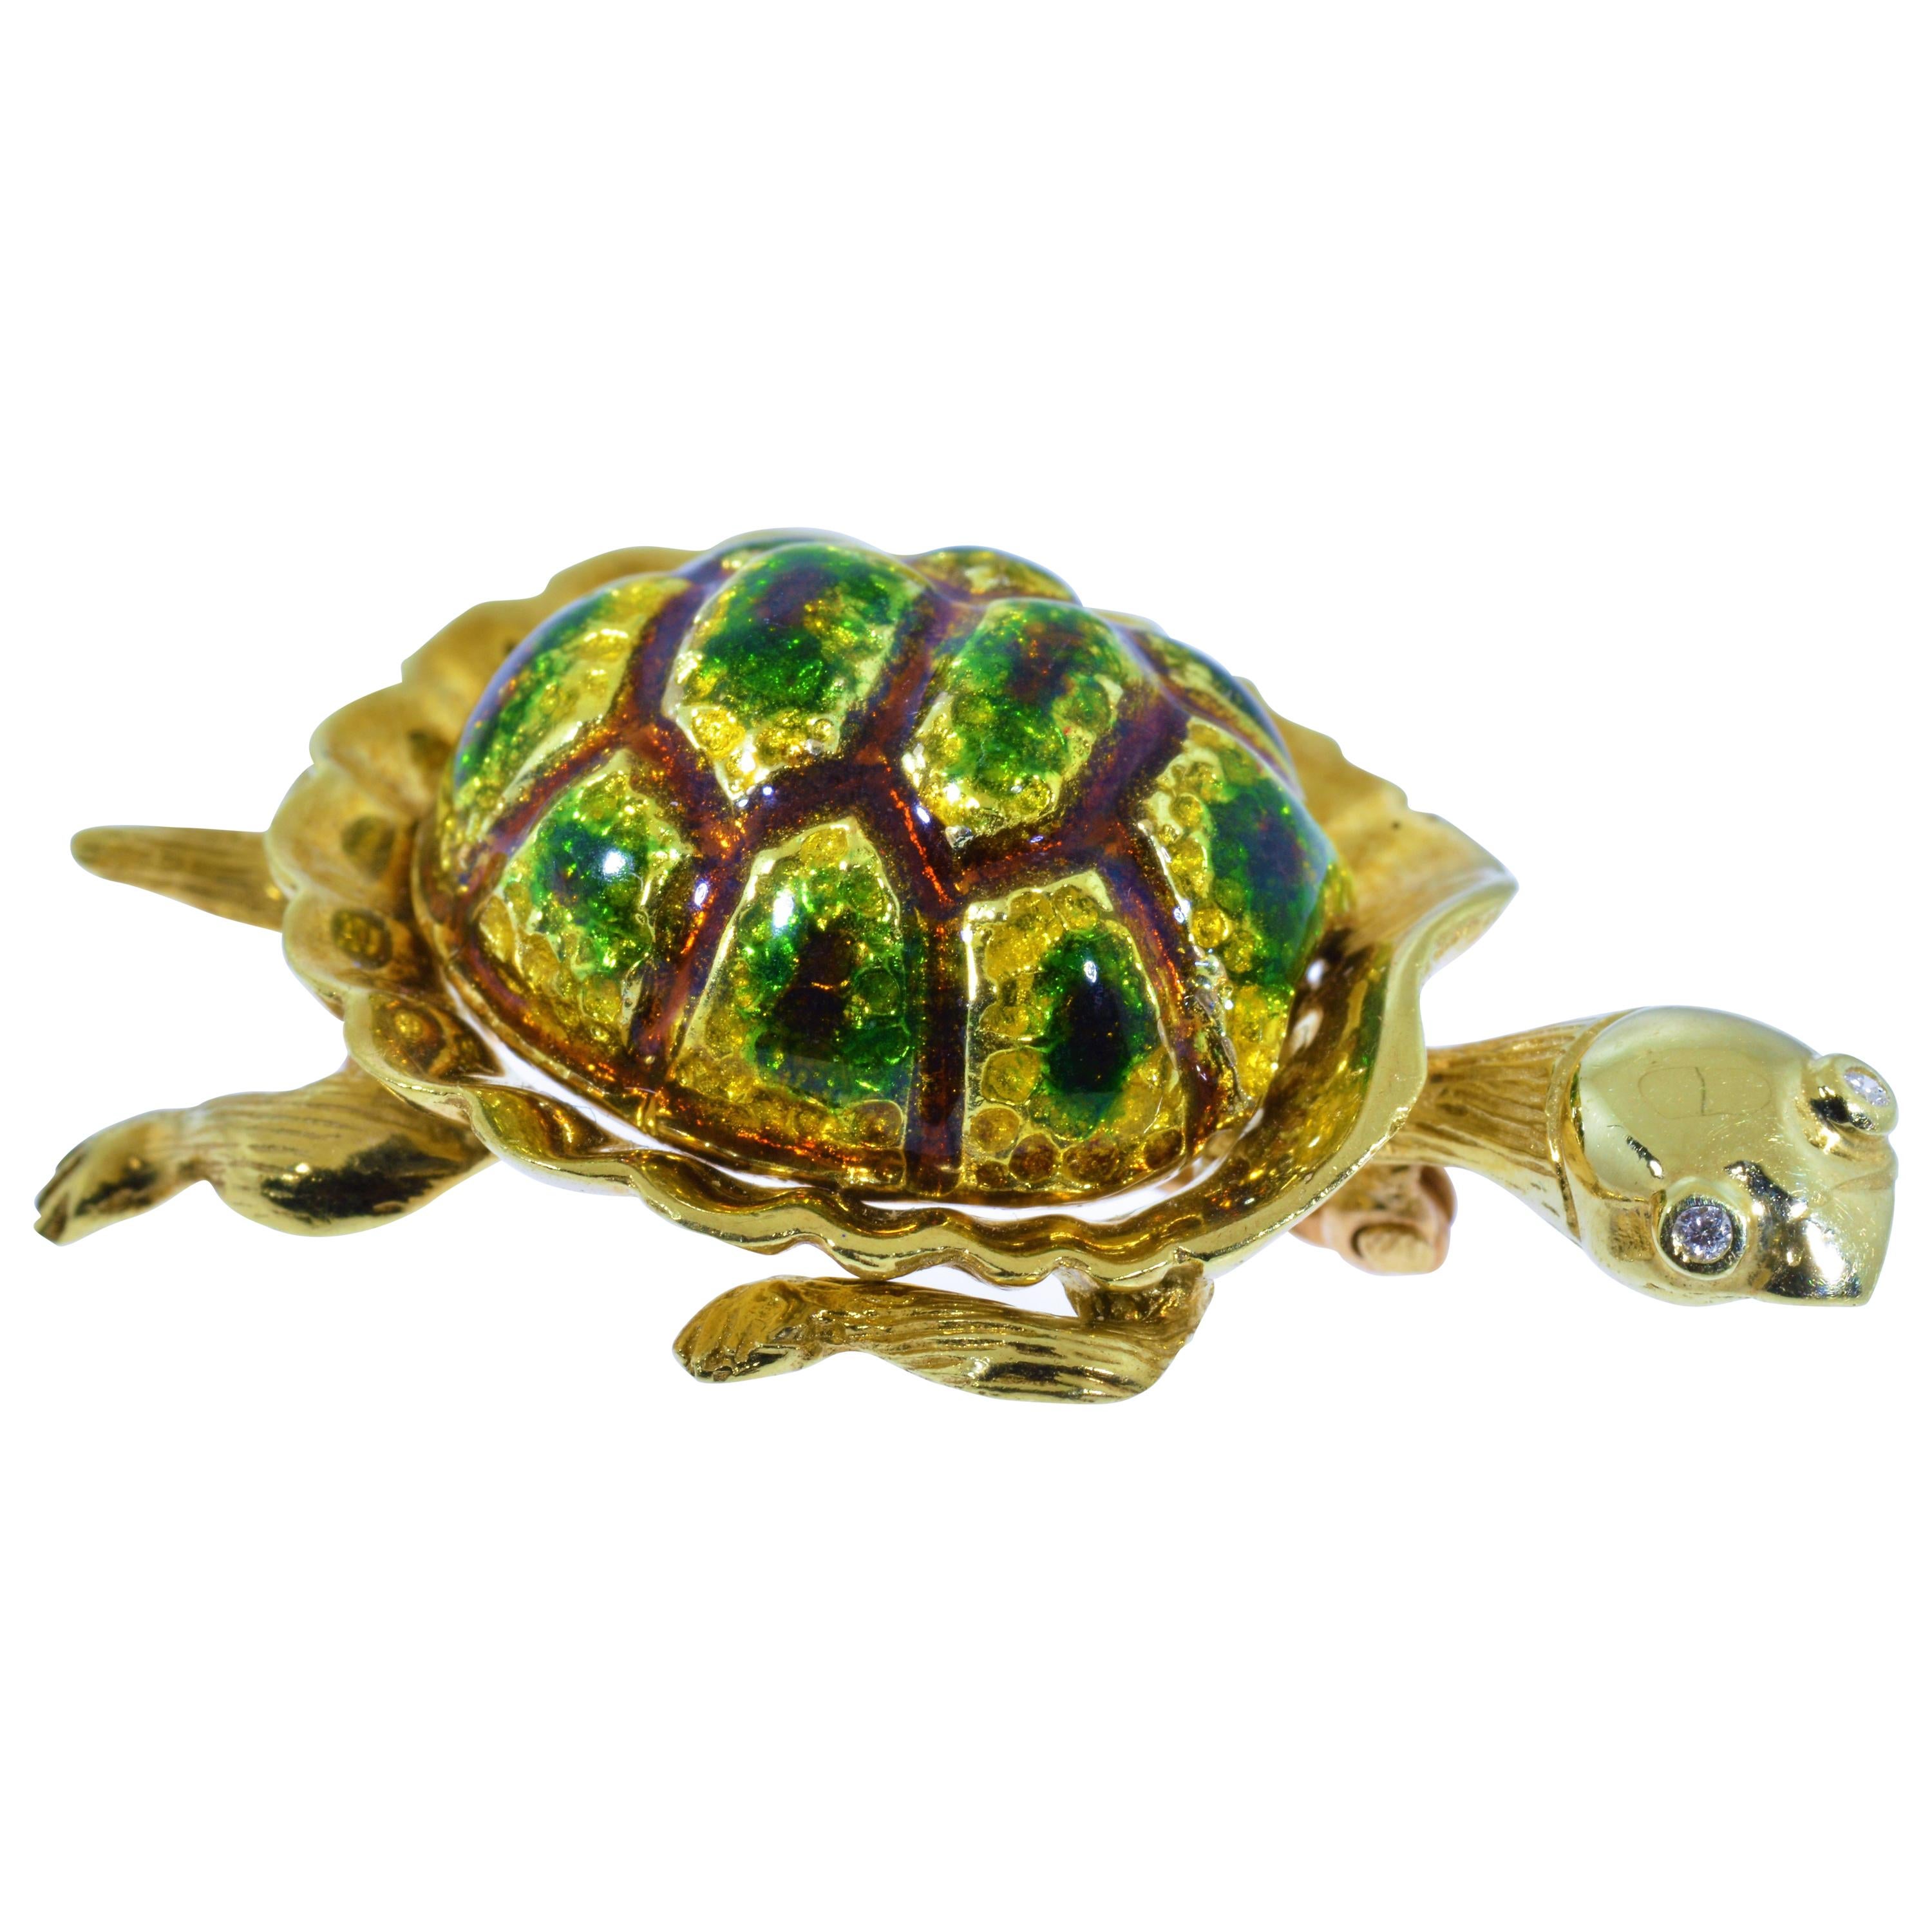 Karbra Turtle Brooch with Enamel and Diamond Eyes For Sale